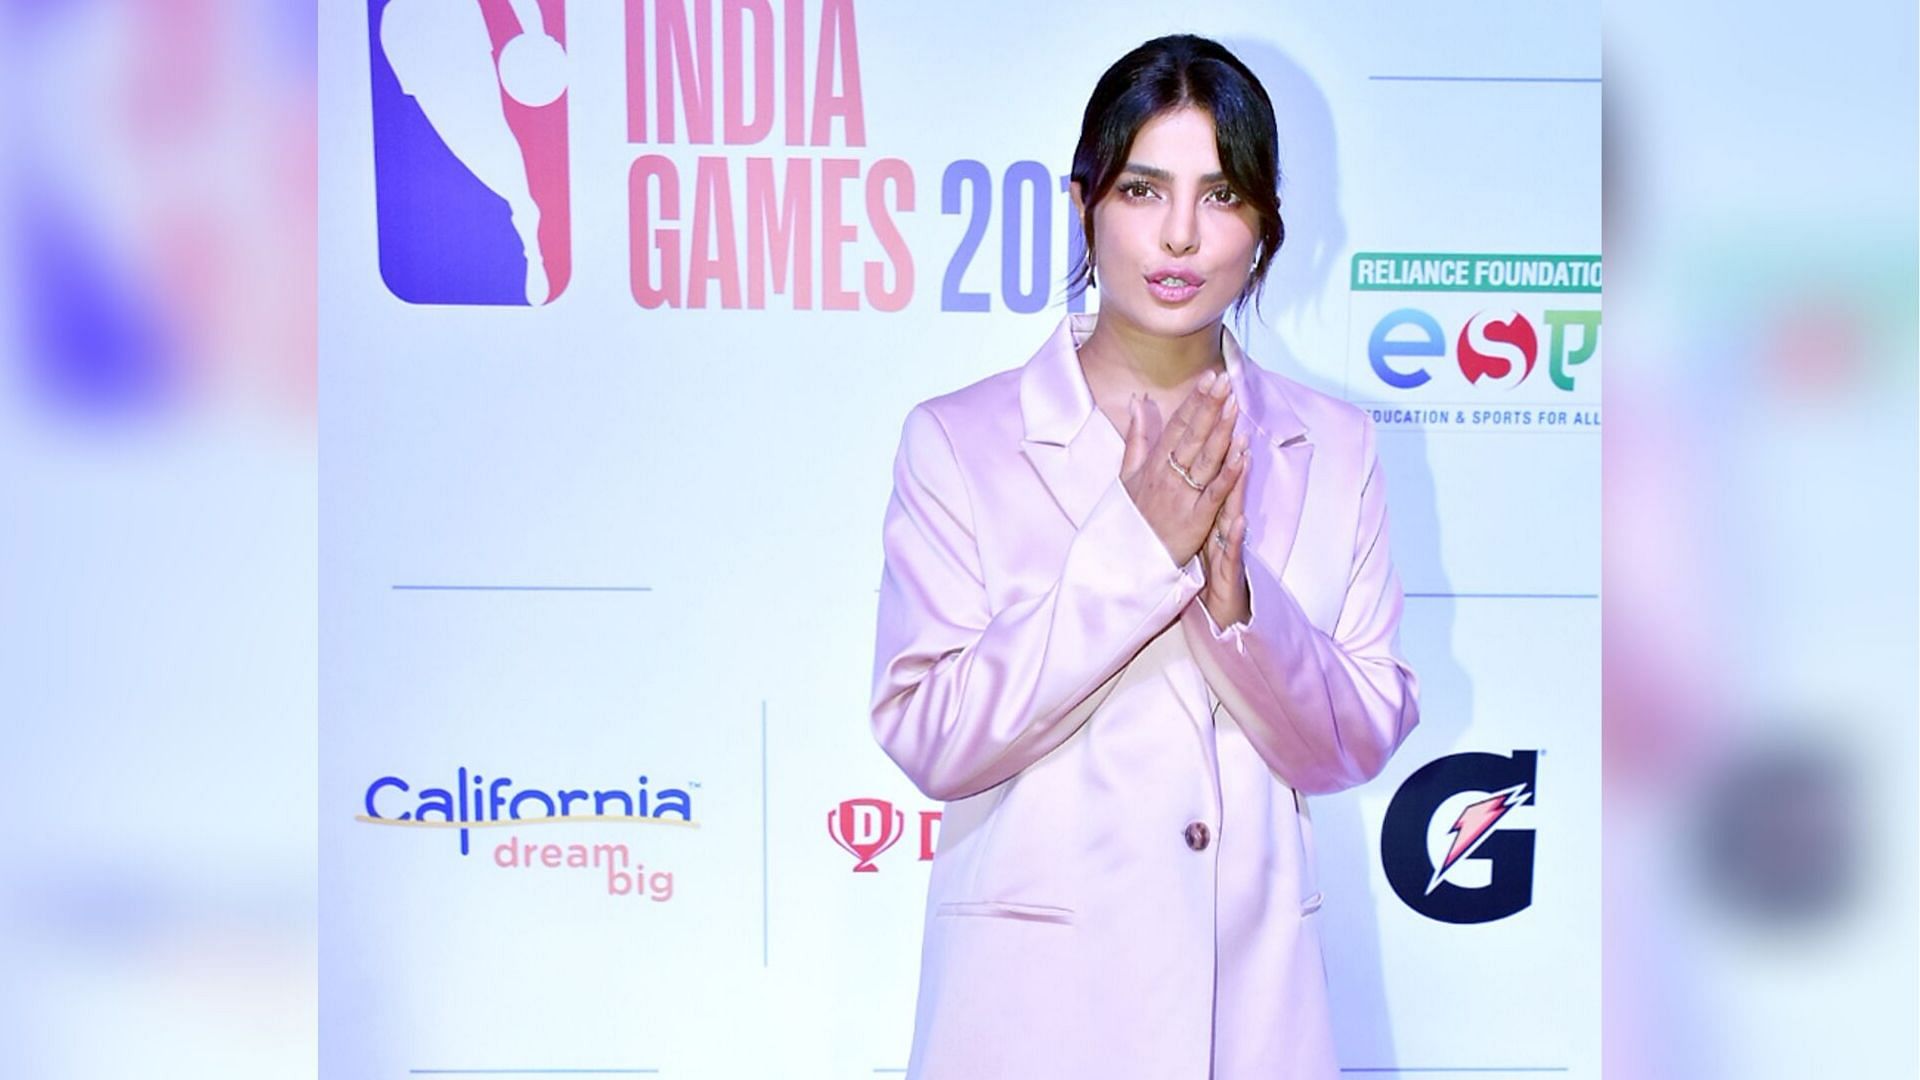 Priyanka Chopra walks the NBA India Games red carpet.